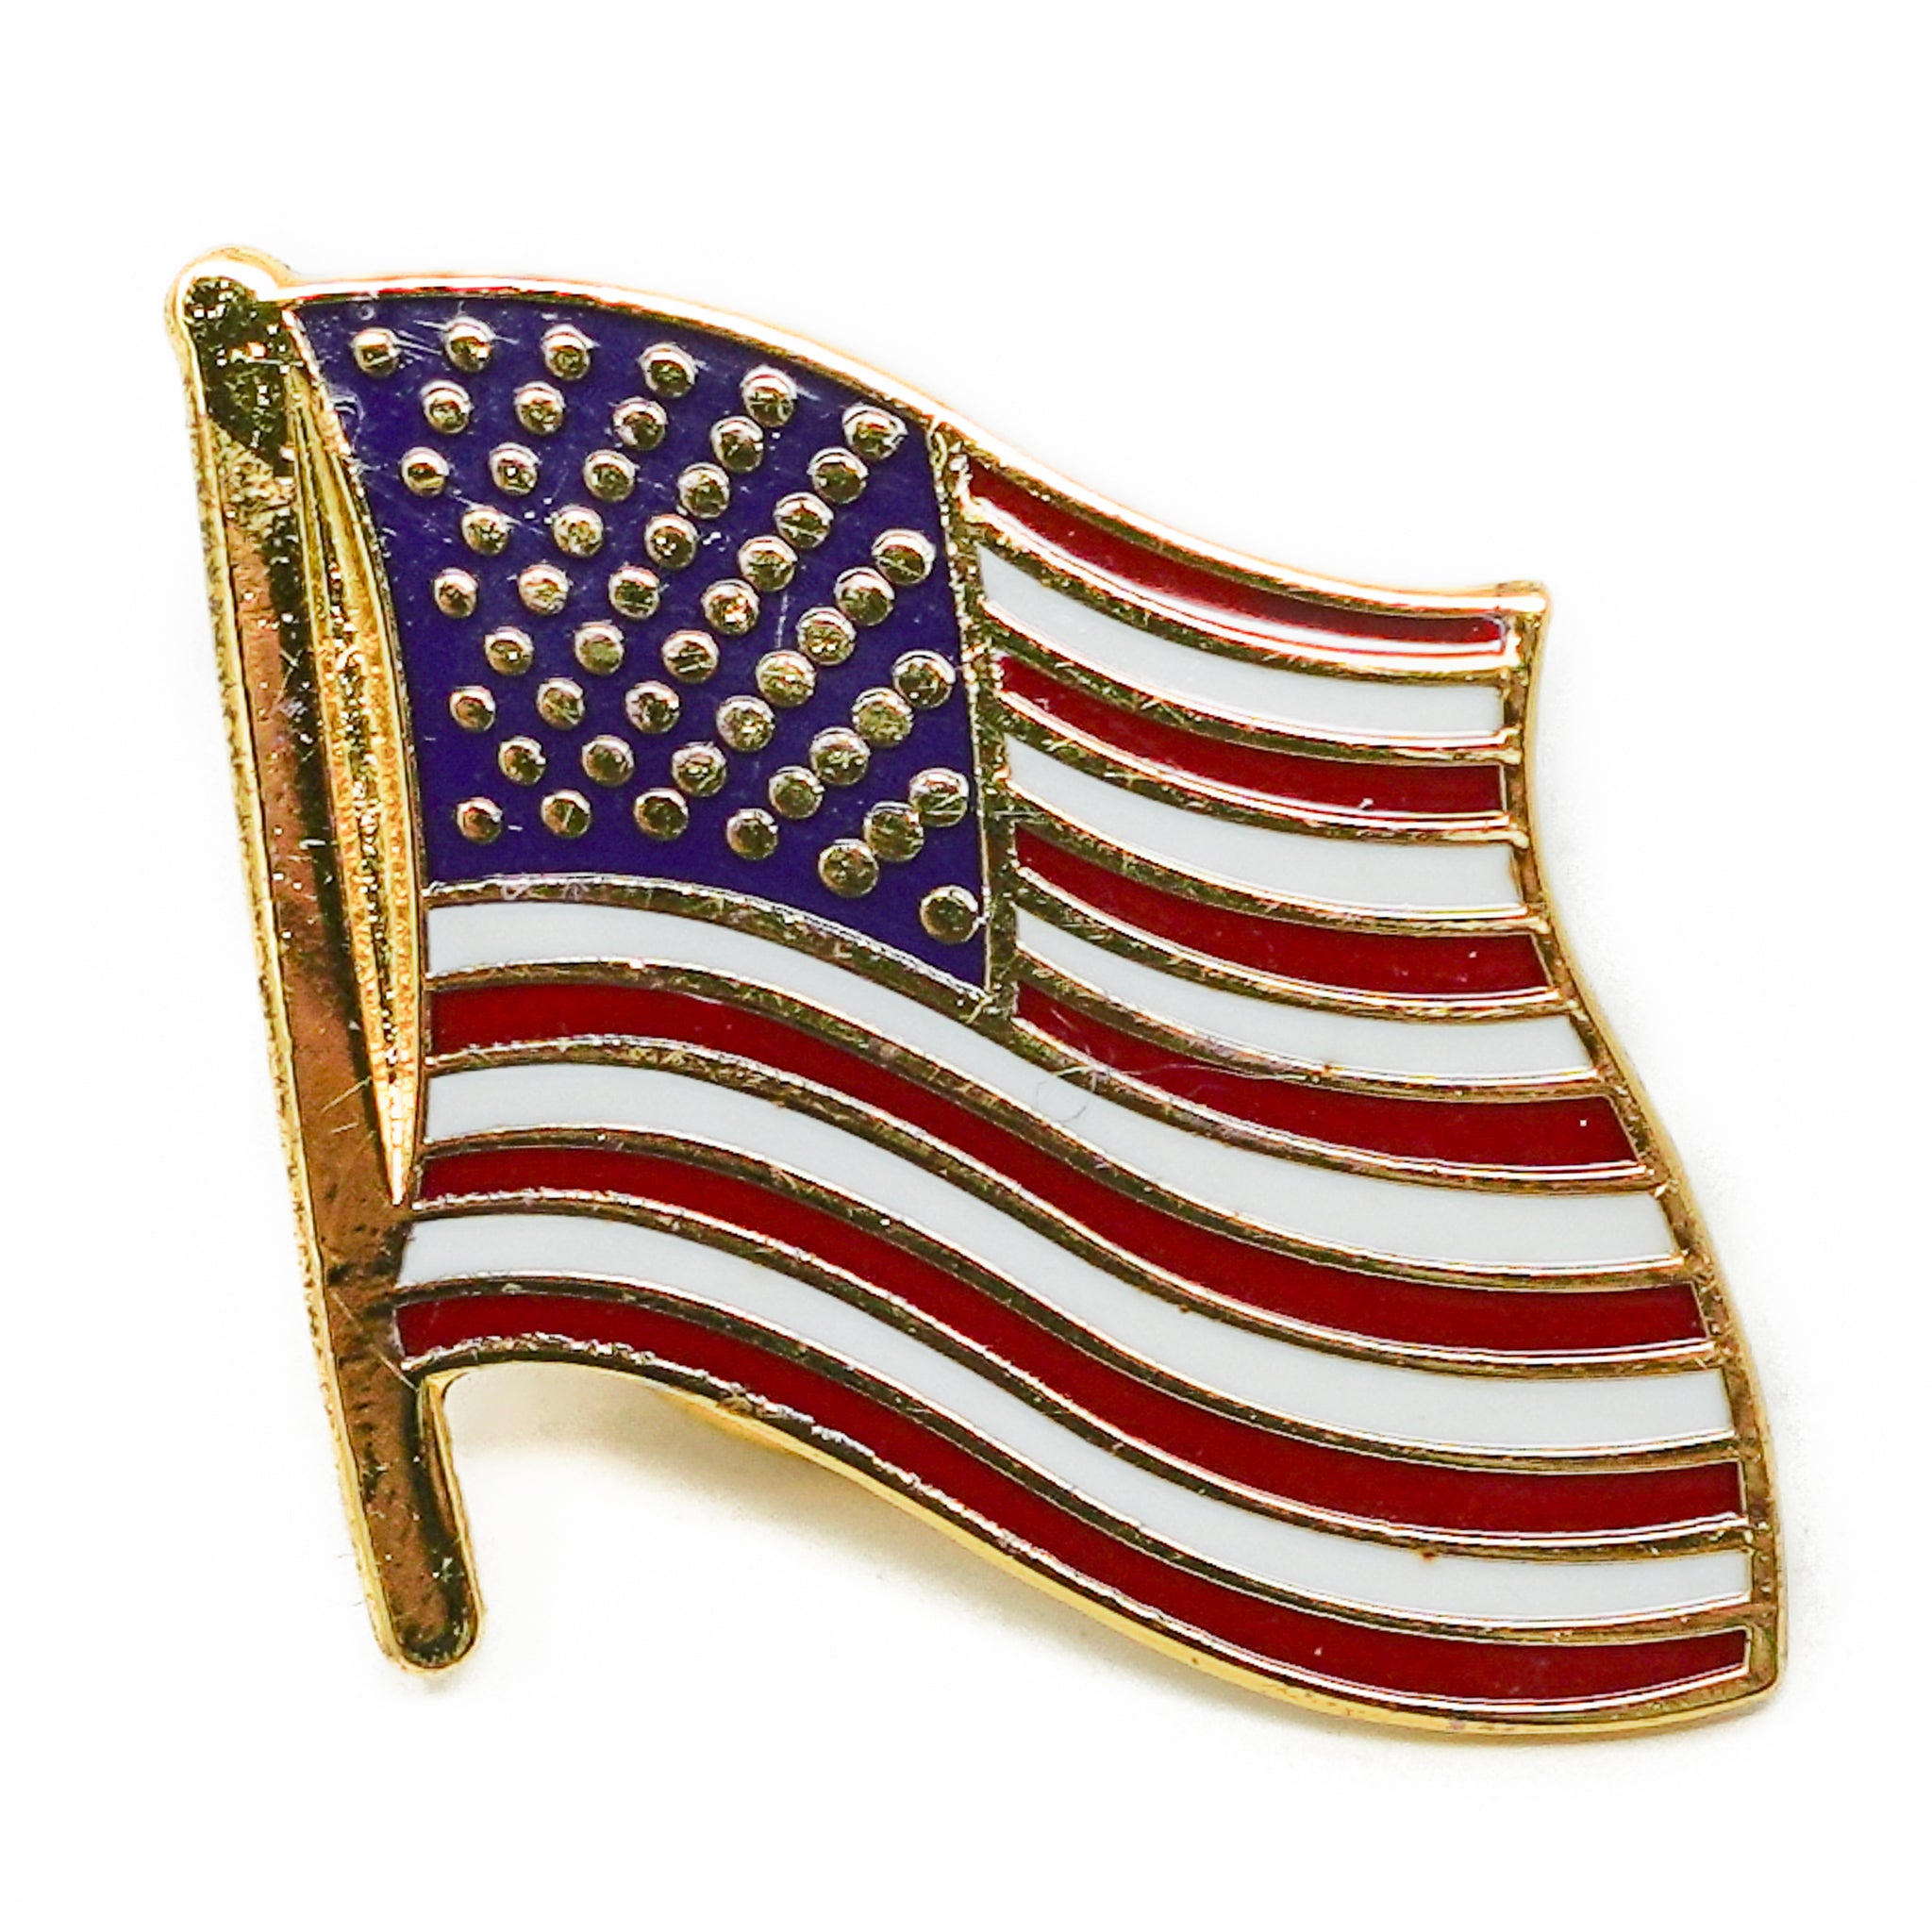 Standard American Flag Lapel Pin